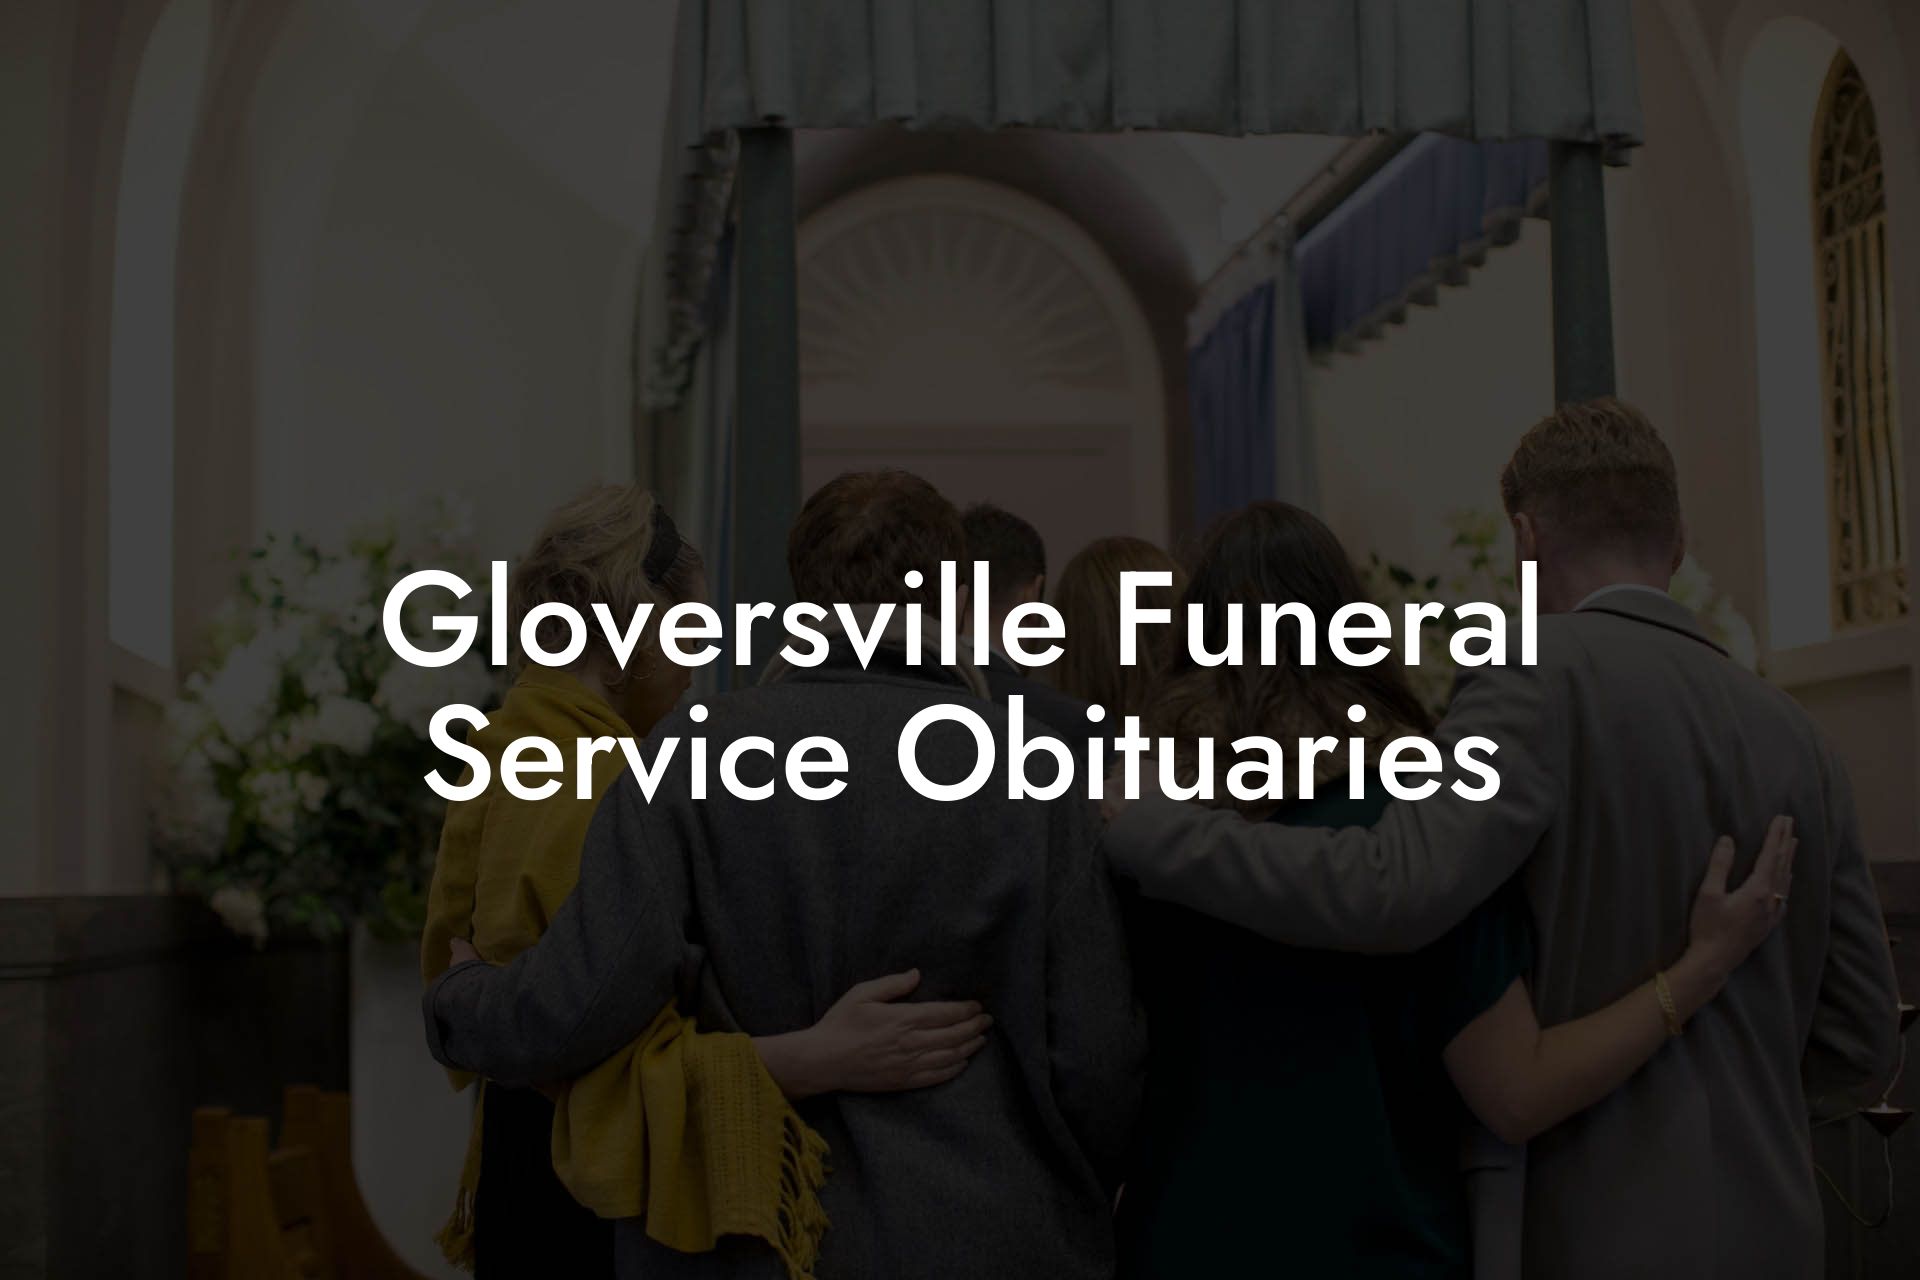 Gloversville Funeral Service Obituaries